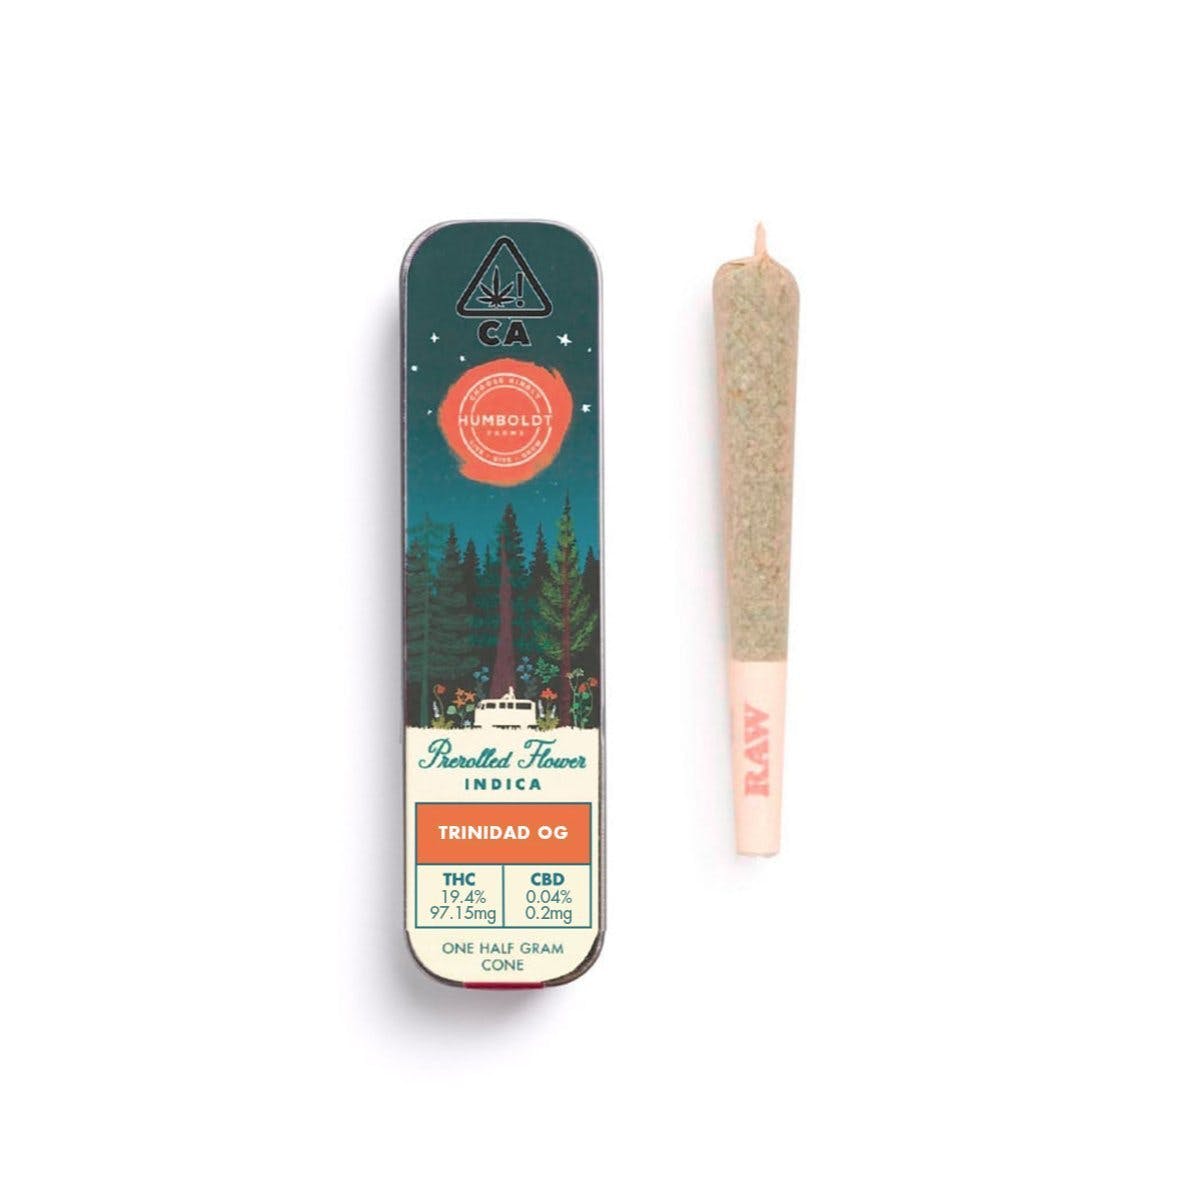 marijuana-dispensaries-2544-3rd-street-san-francisco-trinidad-og-prerolled-single